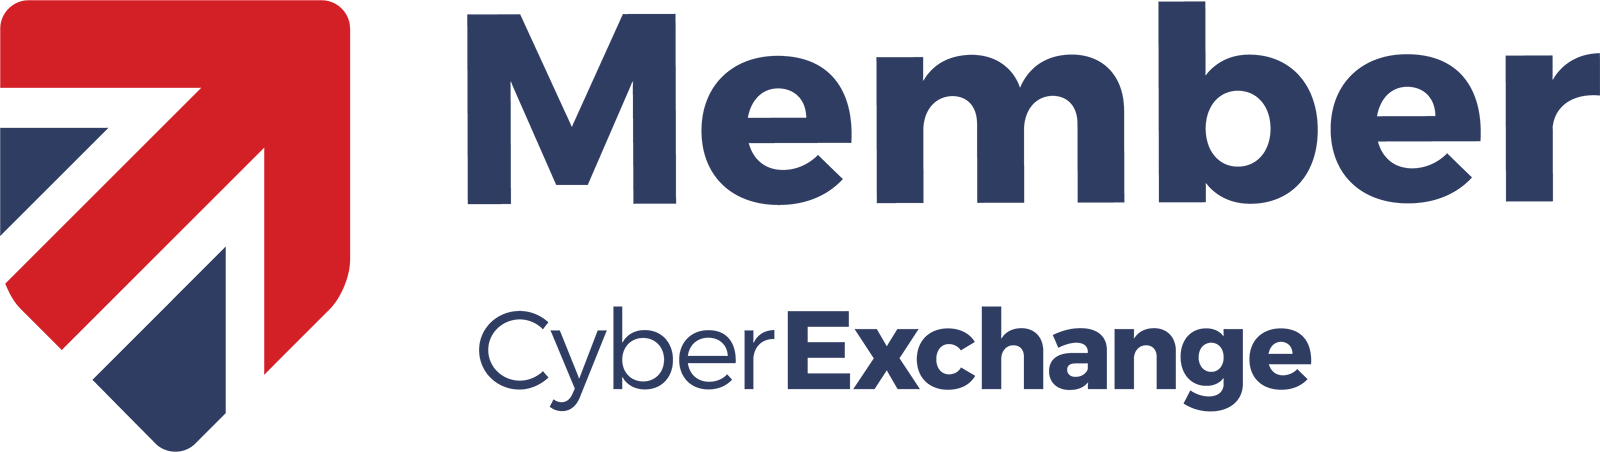 Member CyberExchange